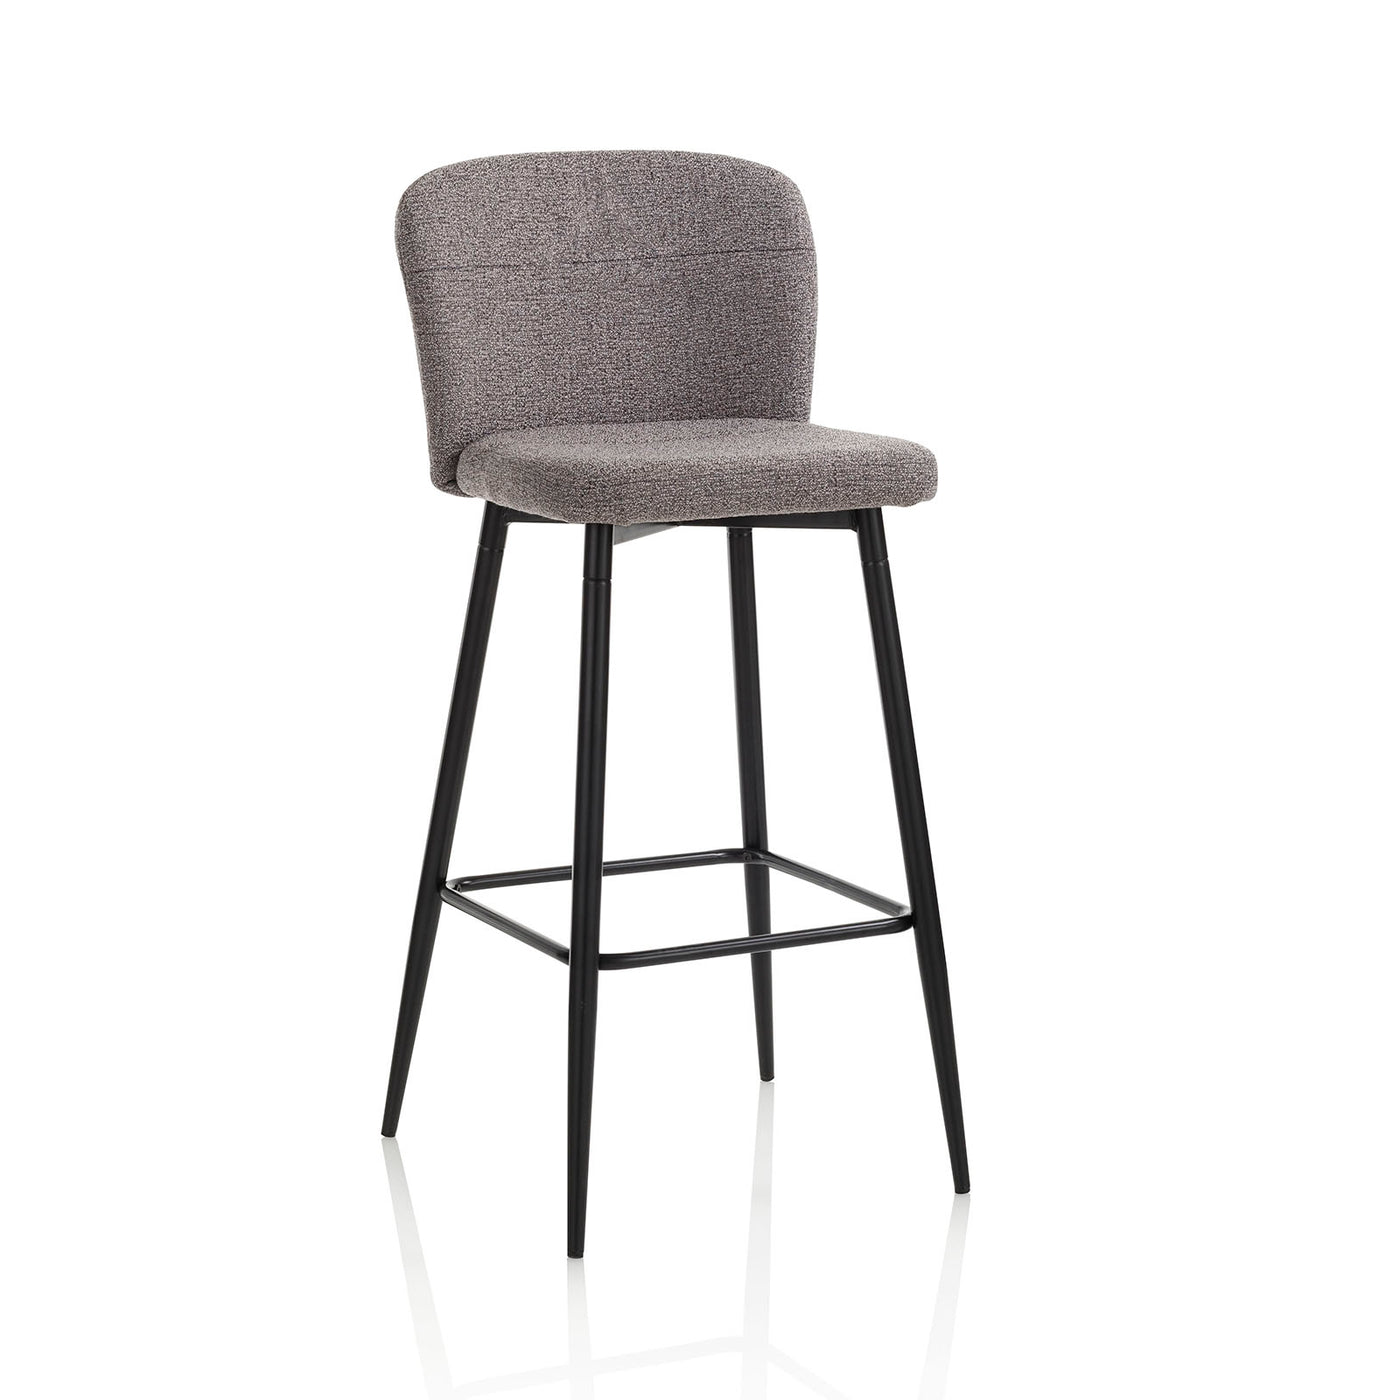 Set of 2 gray SMOOGLE stools